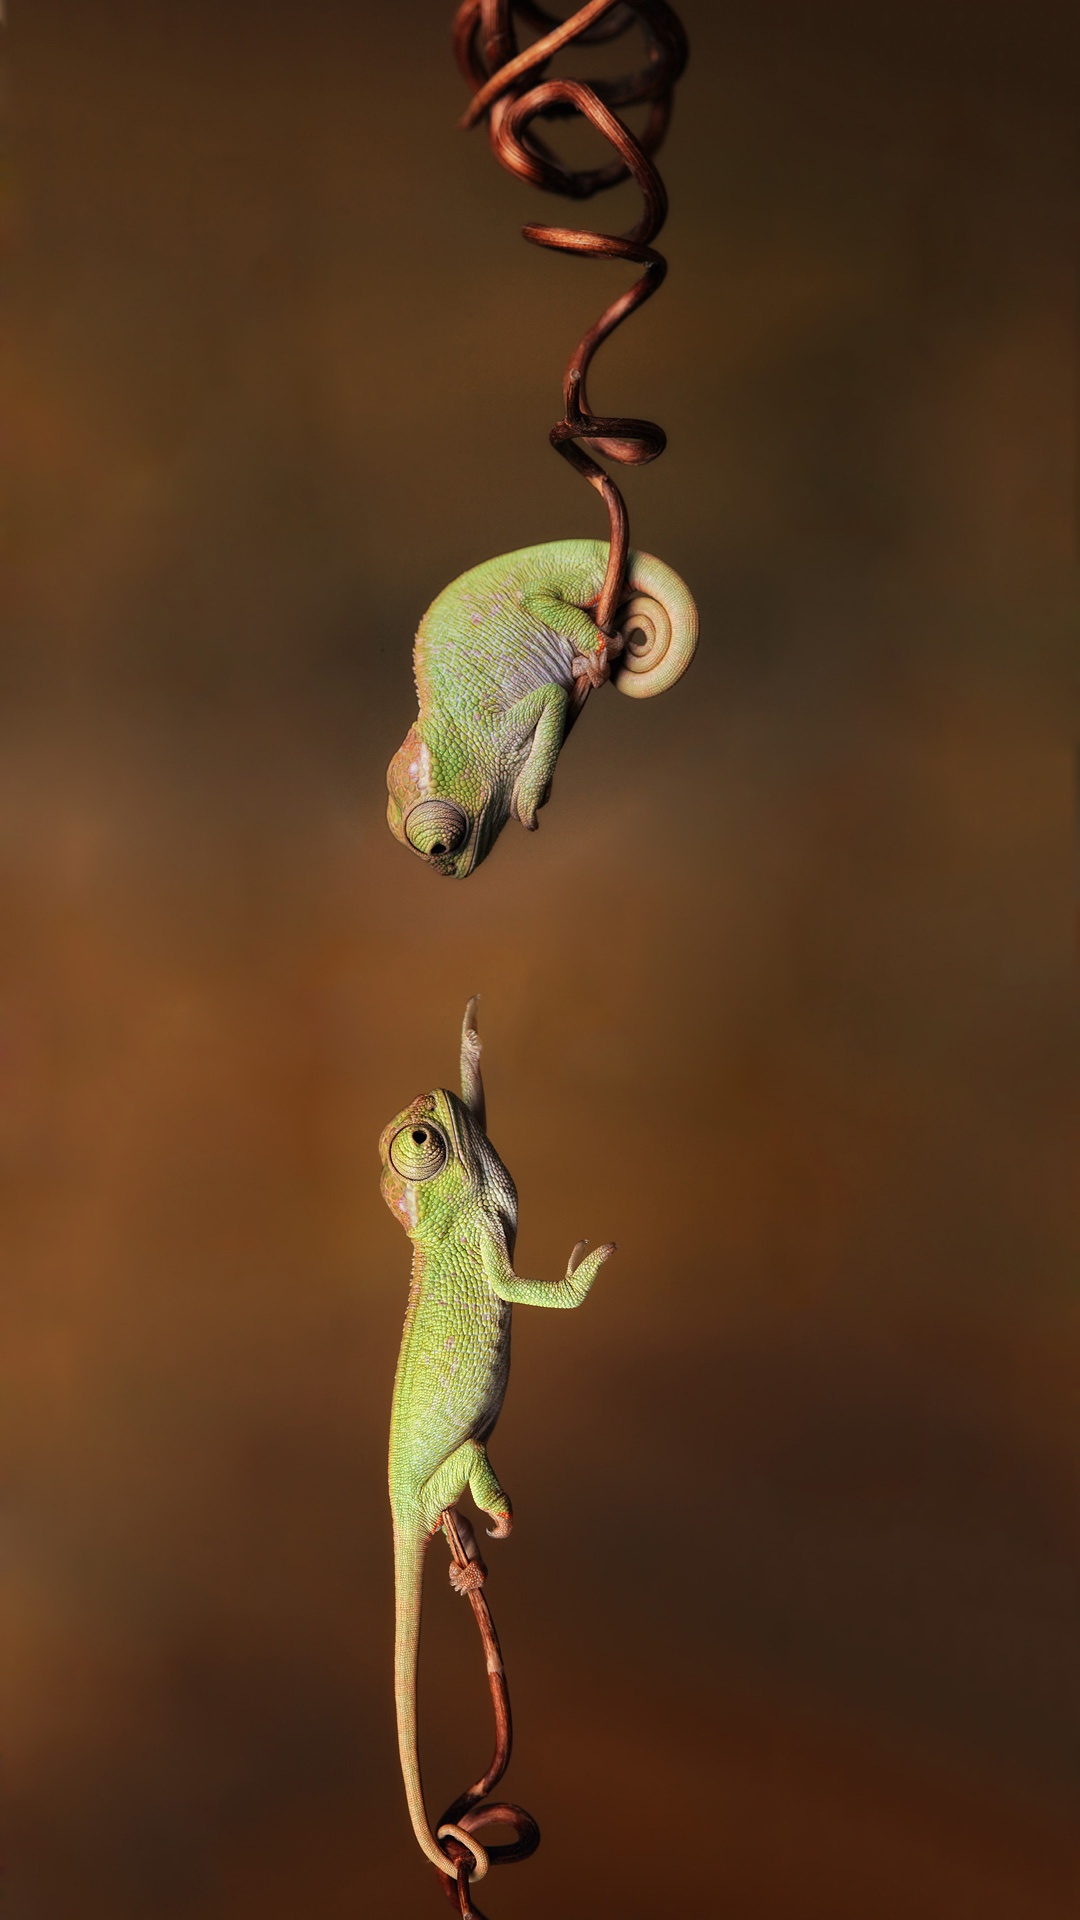 Cute Chameleon iPhone Wallpaper resolution 1080x1920